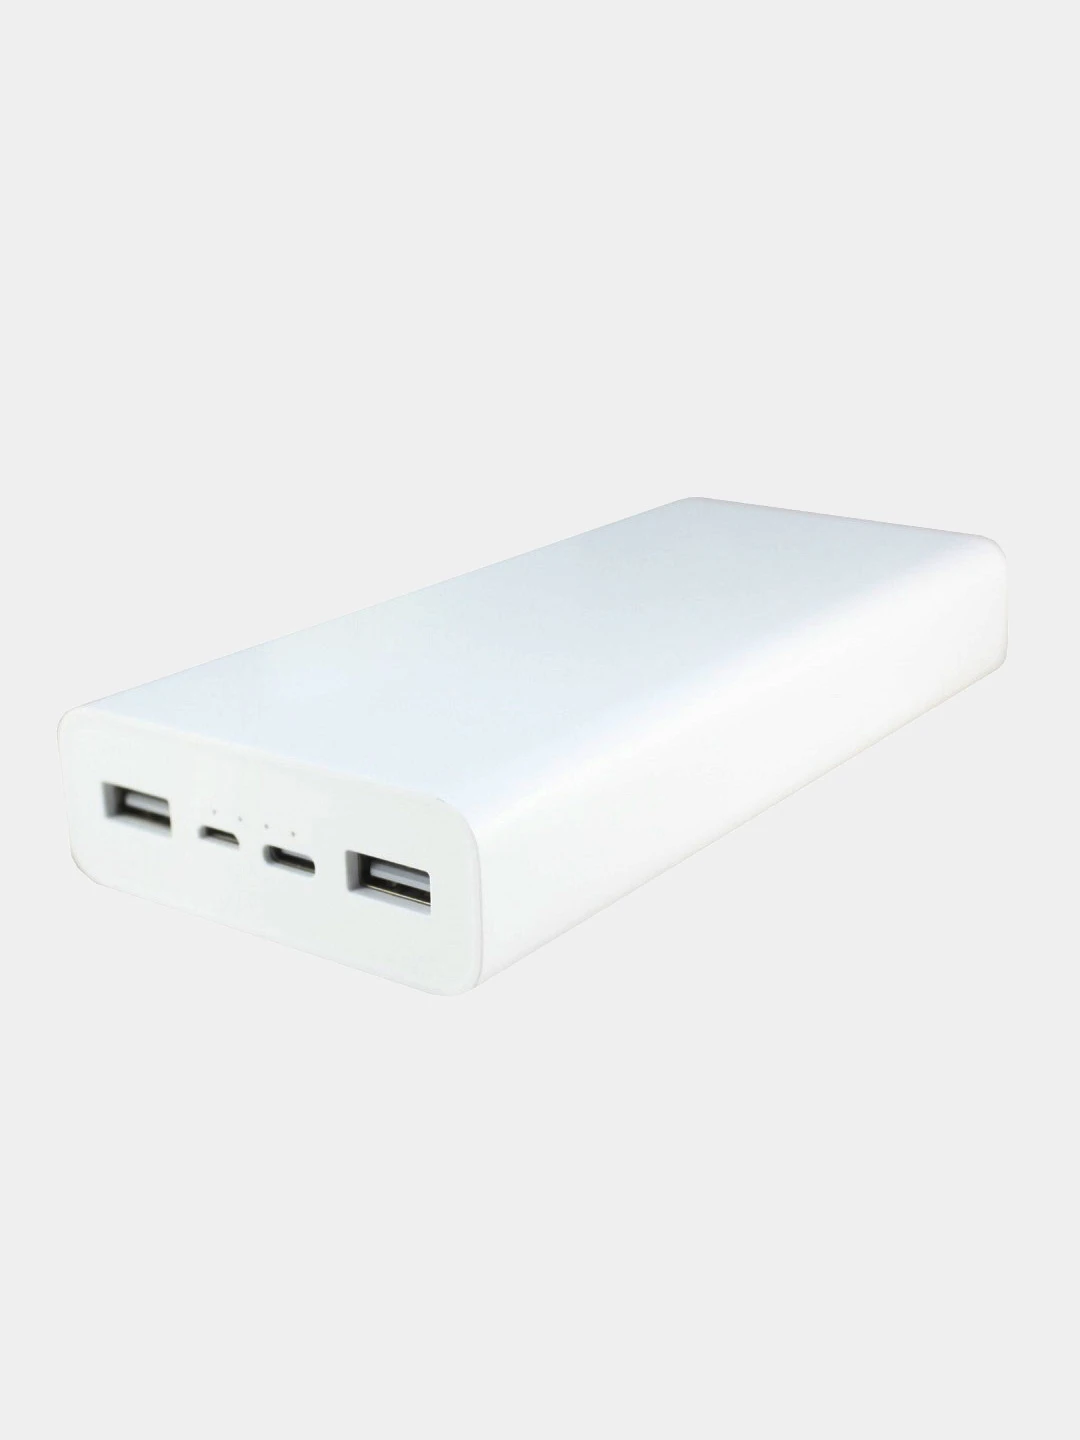 Аккумулятор xiaomi mi power bank 3 20000. Внешний аккумулятор Xiaomi Power Bank 3 2usb plm18zm 20000 Mah белый. Xiaomi mi Power Bank 3 (20000 Mah) USB-C Type. Power Bank Xiaomi plm18zm 20000mah USB-C White.